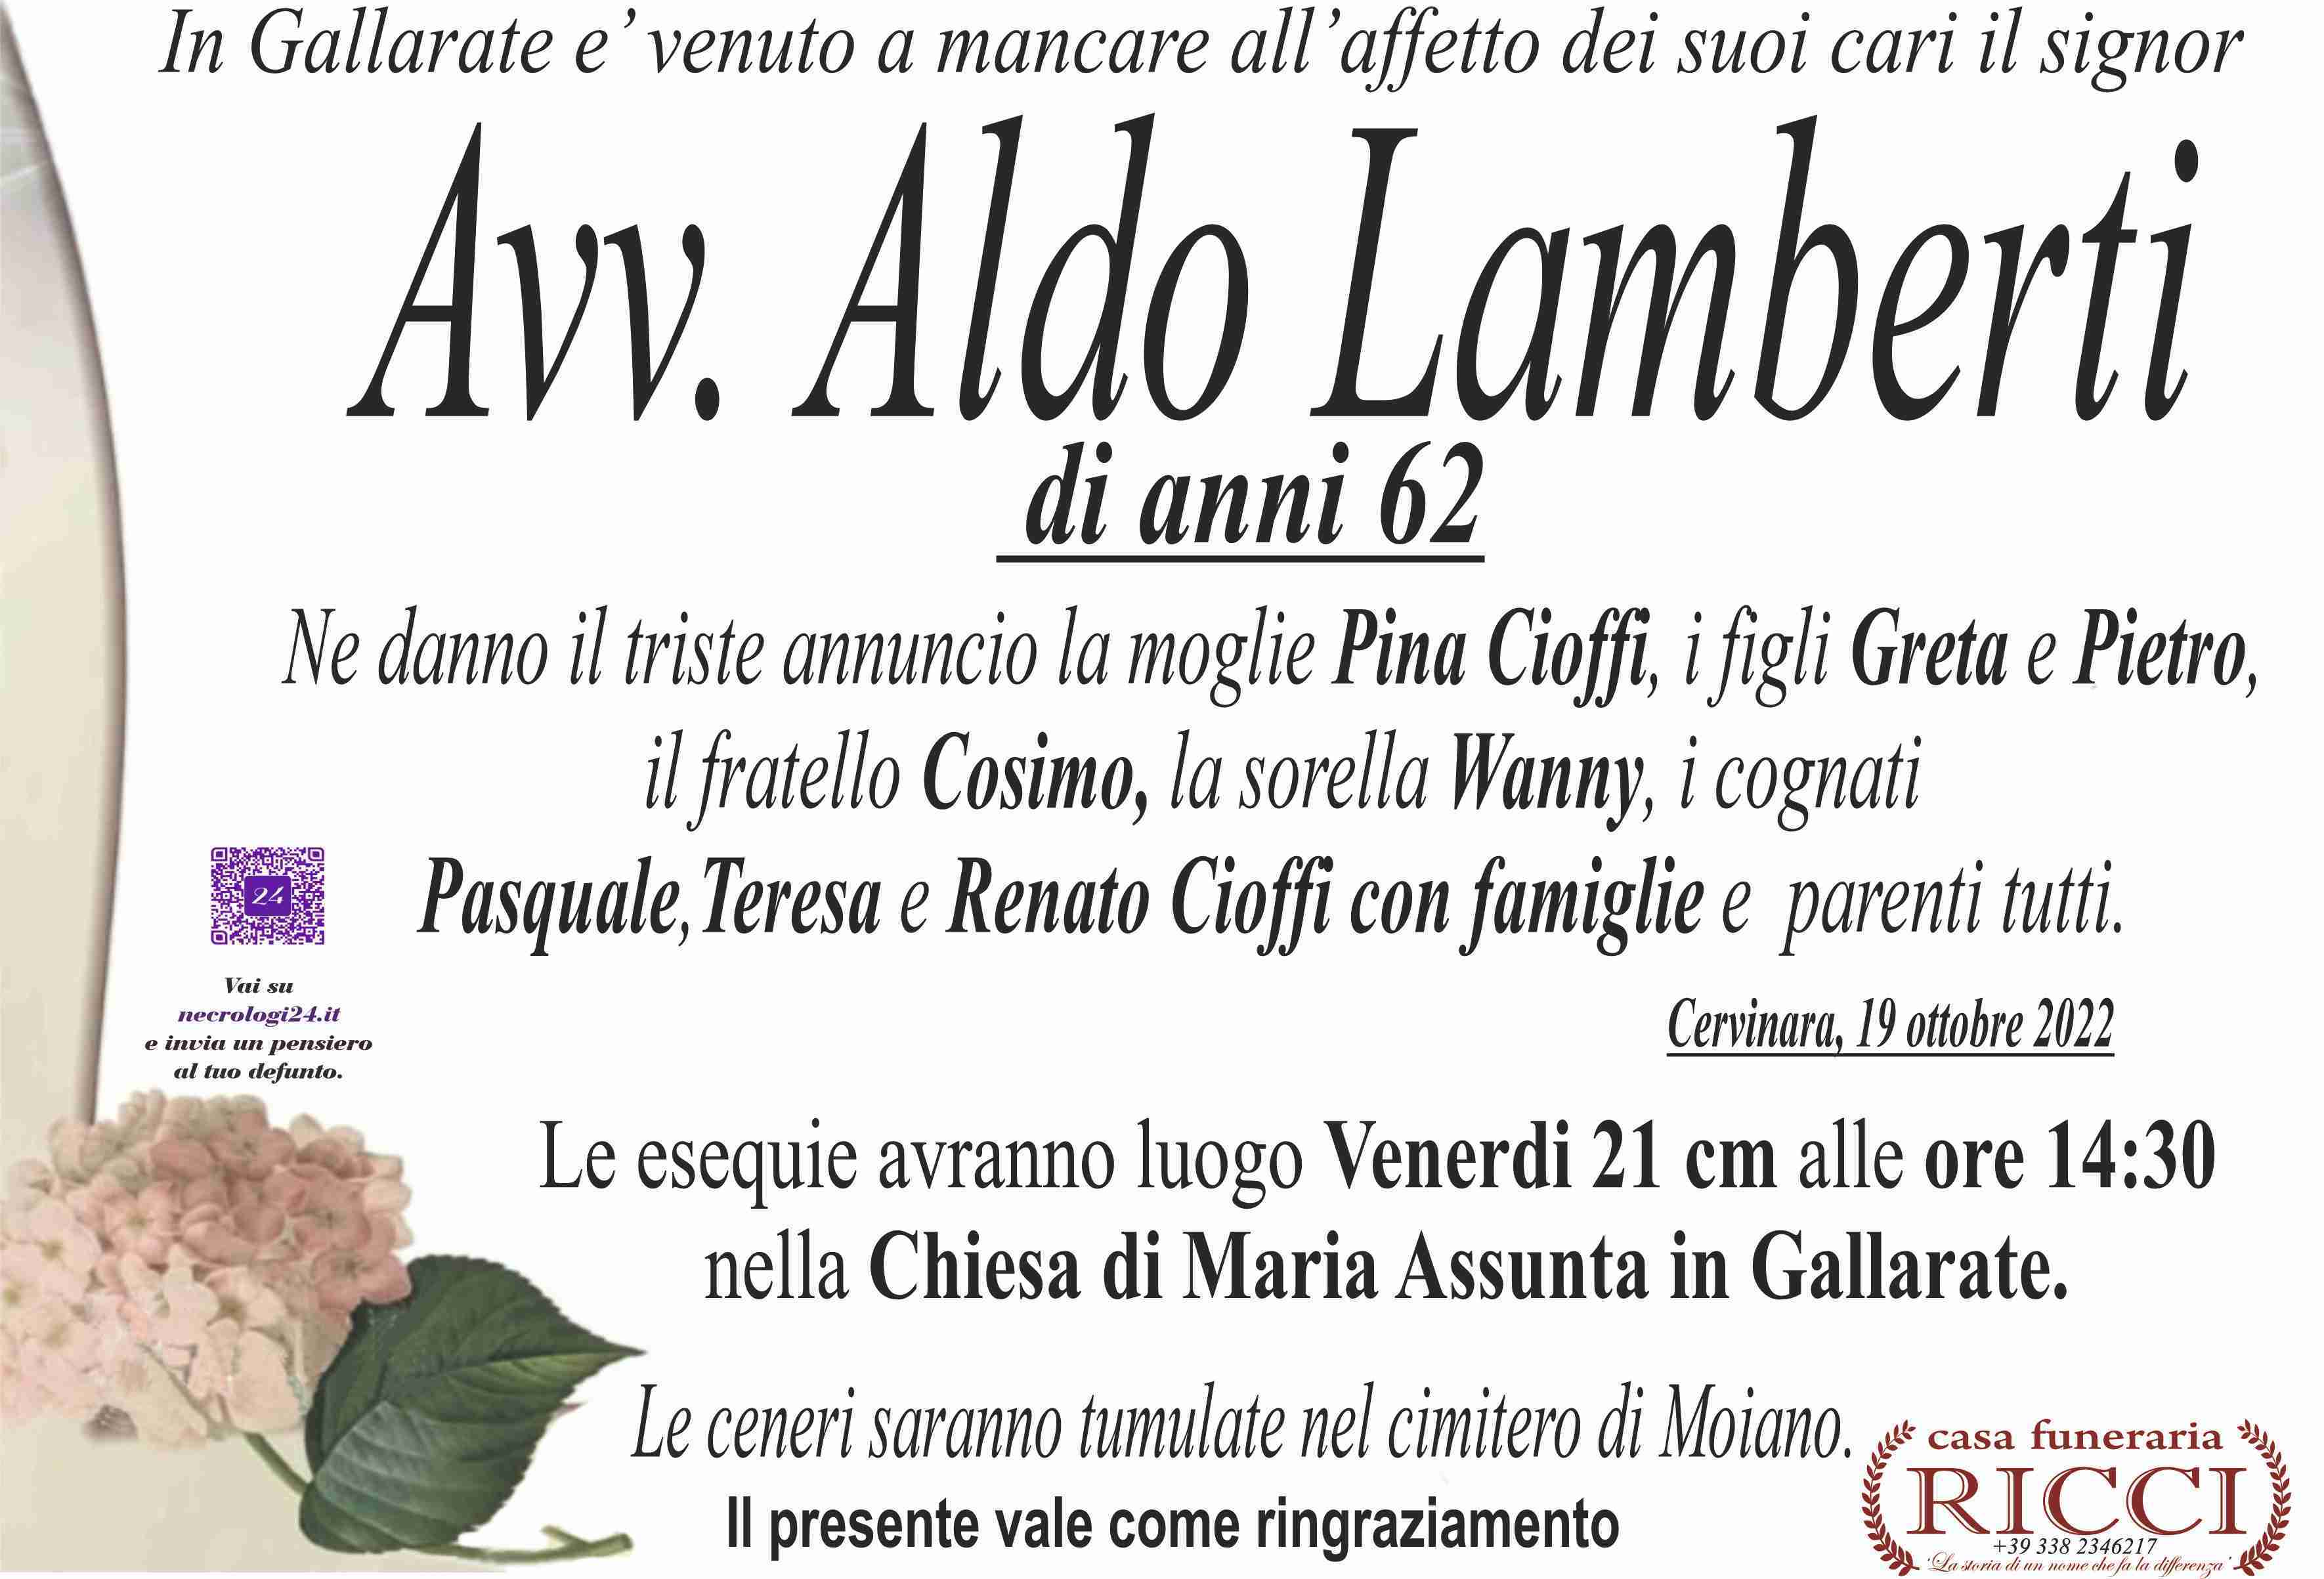 Aldo Lamberti